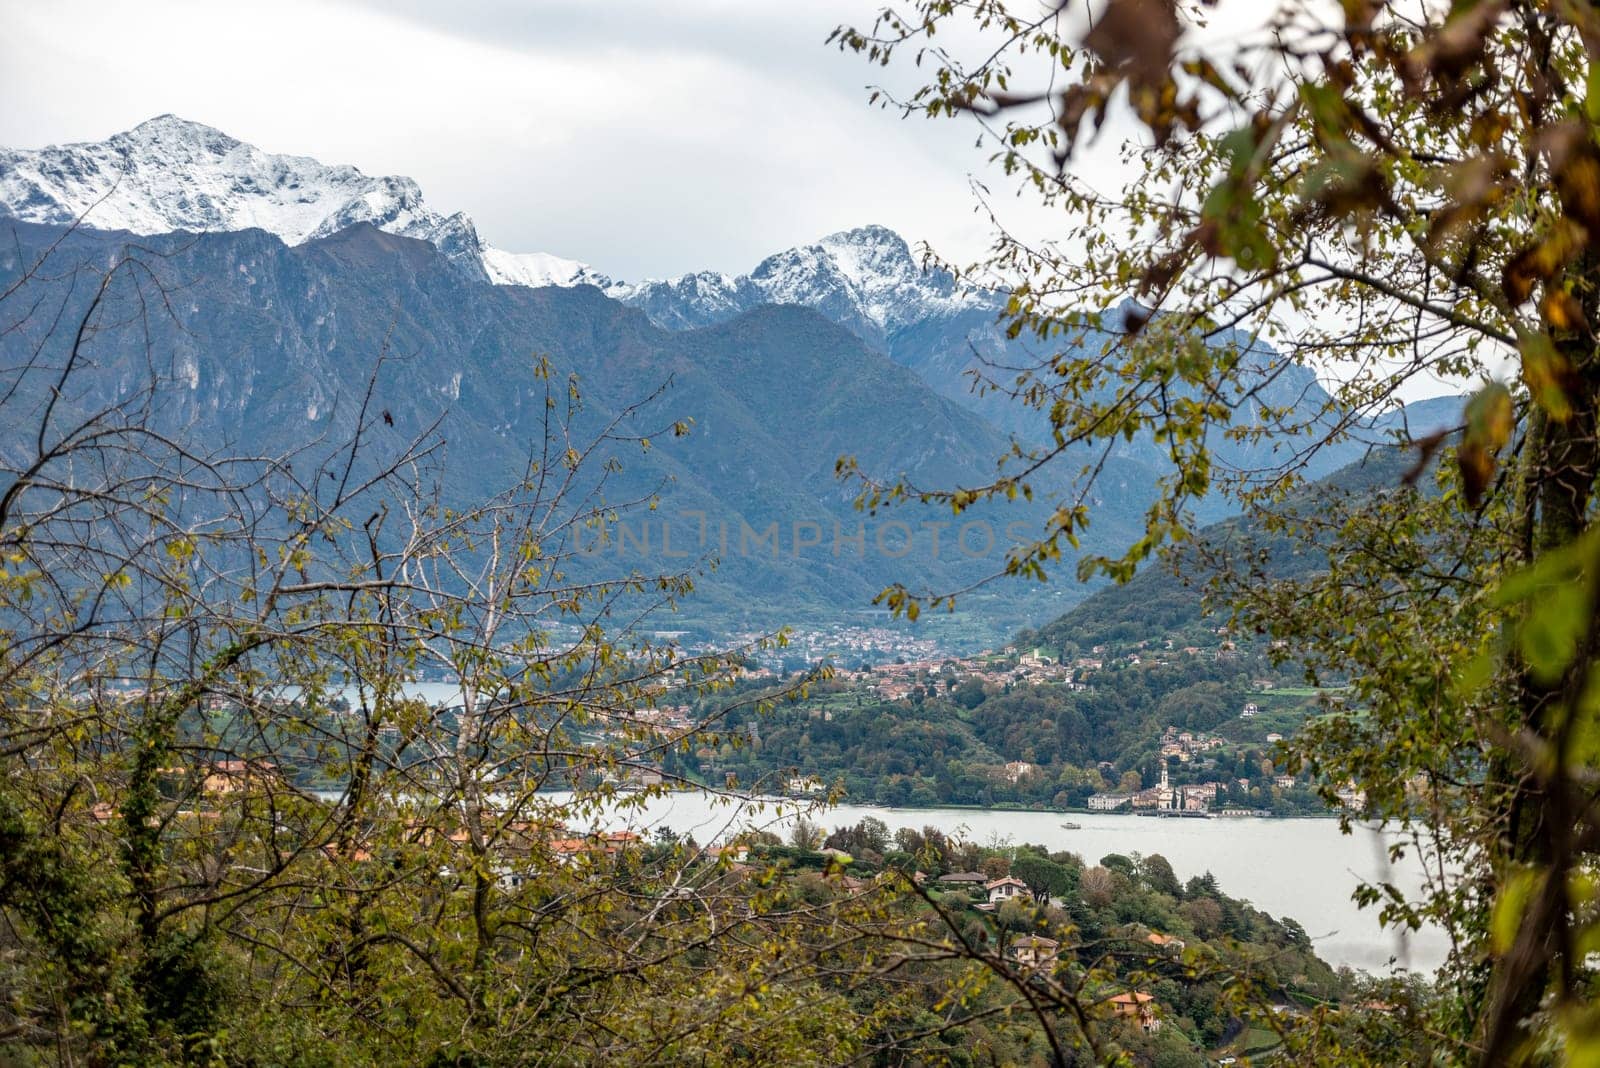 Hiking up a mountain at lake Como near Tremezzo by imagoDens